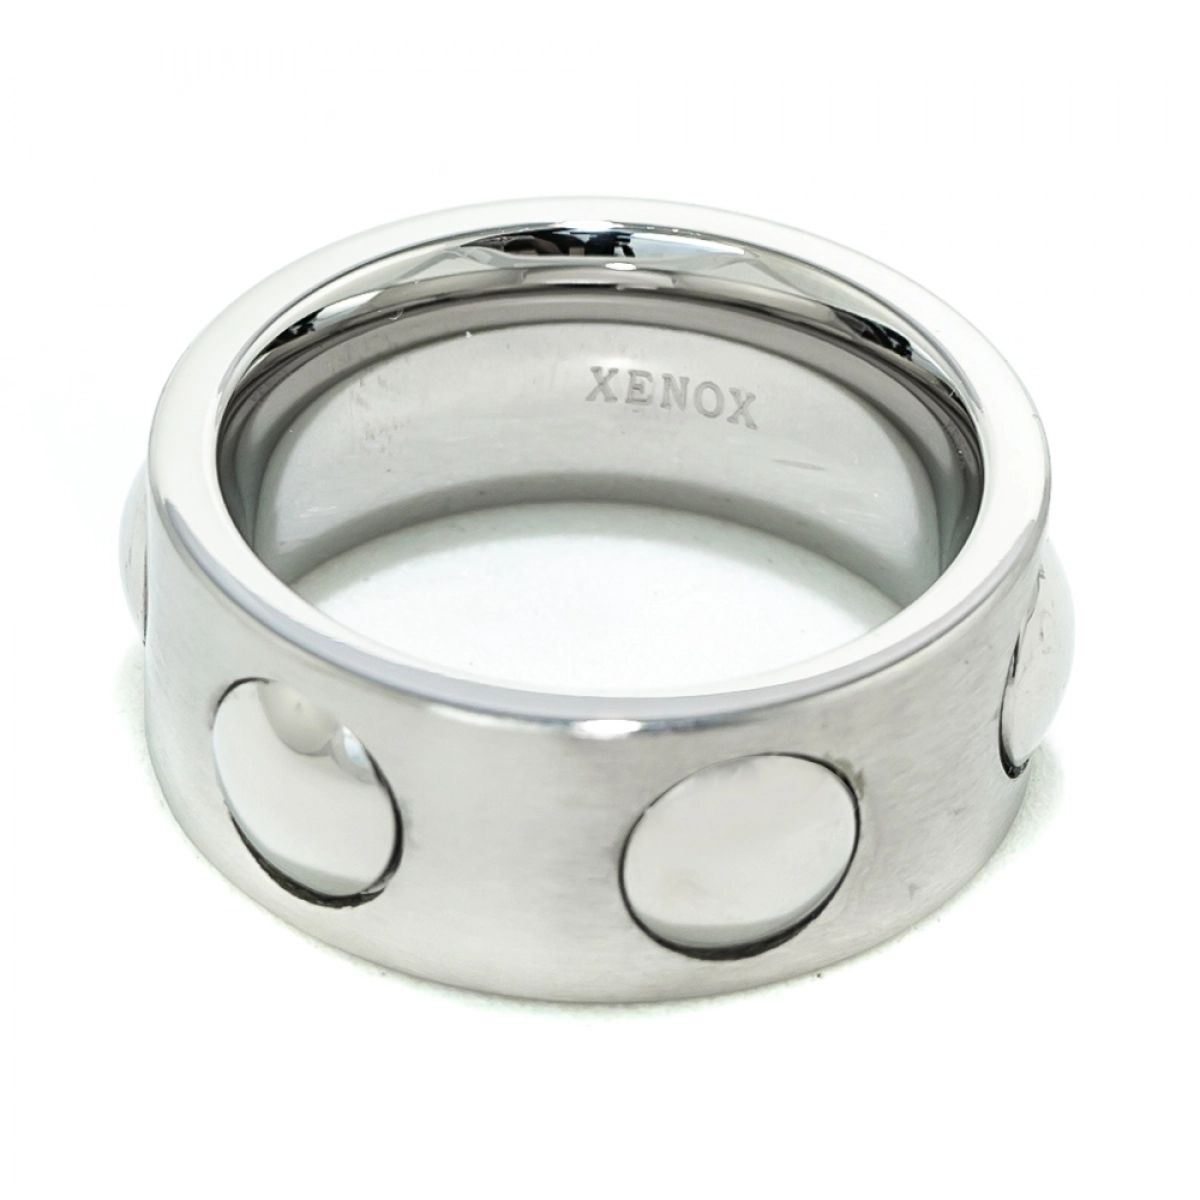 RING WOMAN X1560-52 Xenox